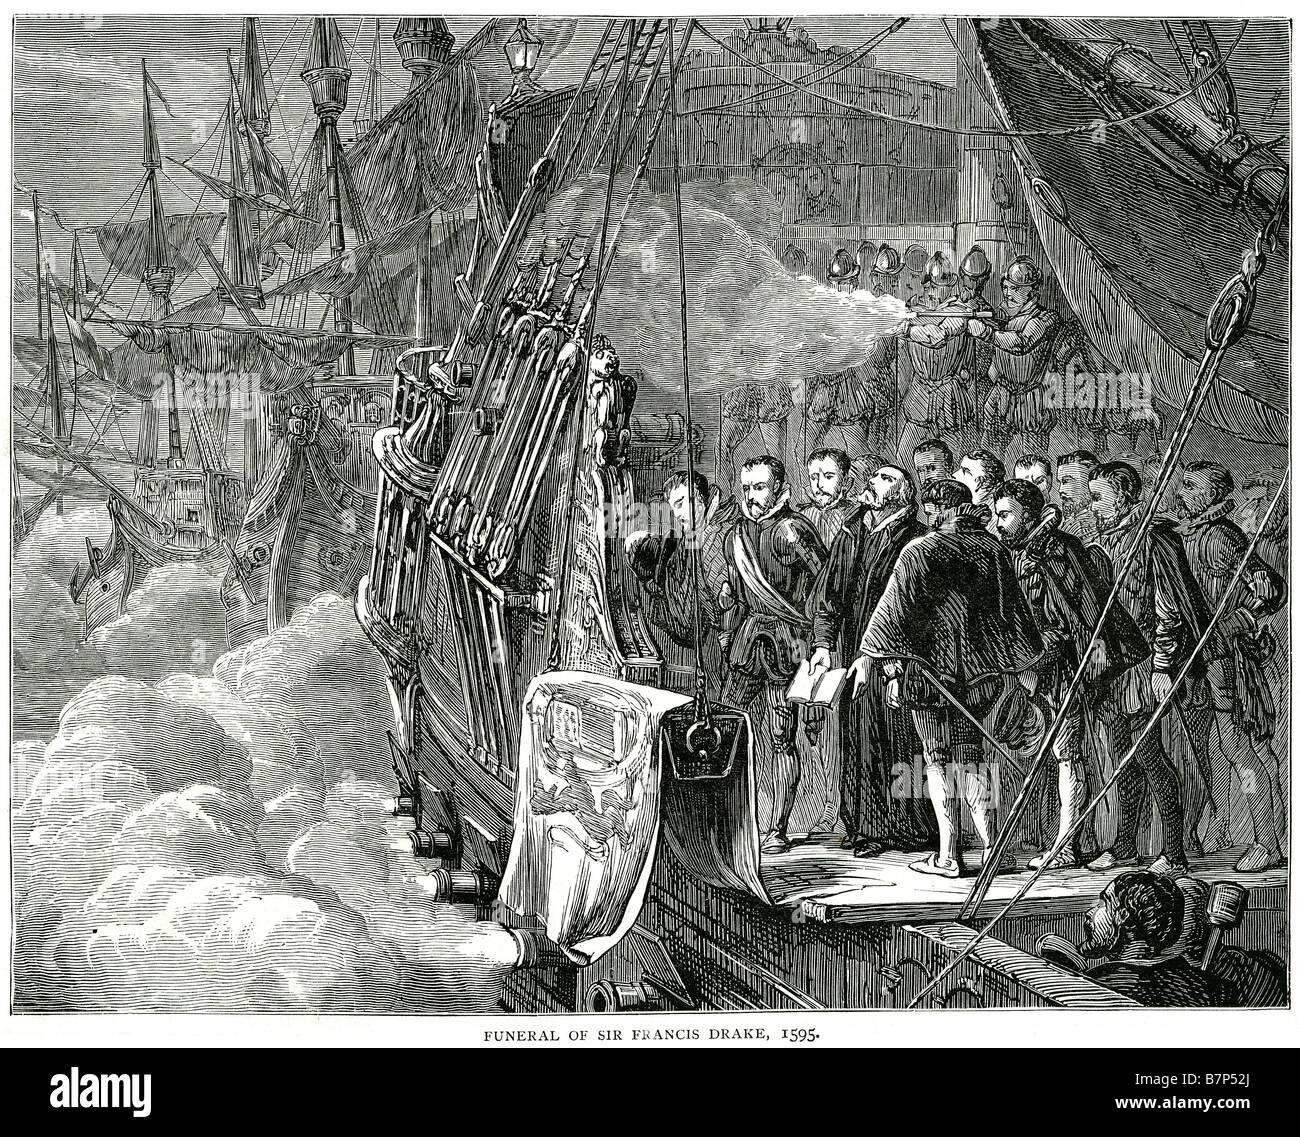 funeral sir francis drake 1595 sailing ship cannon shot fire guns ball destroy smoke powder blast seige dech mast army war Stock Photo